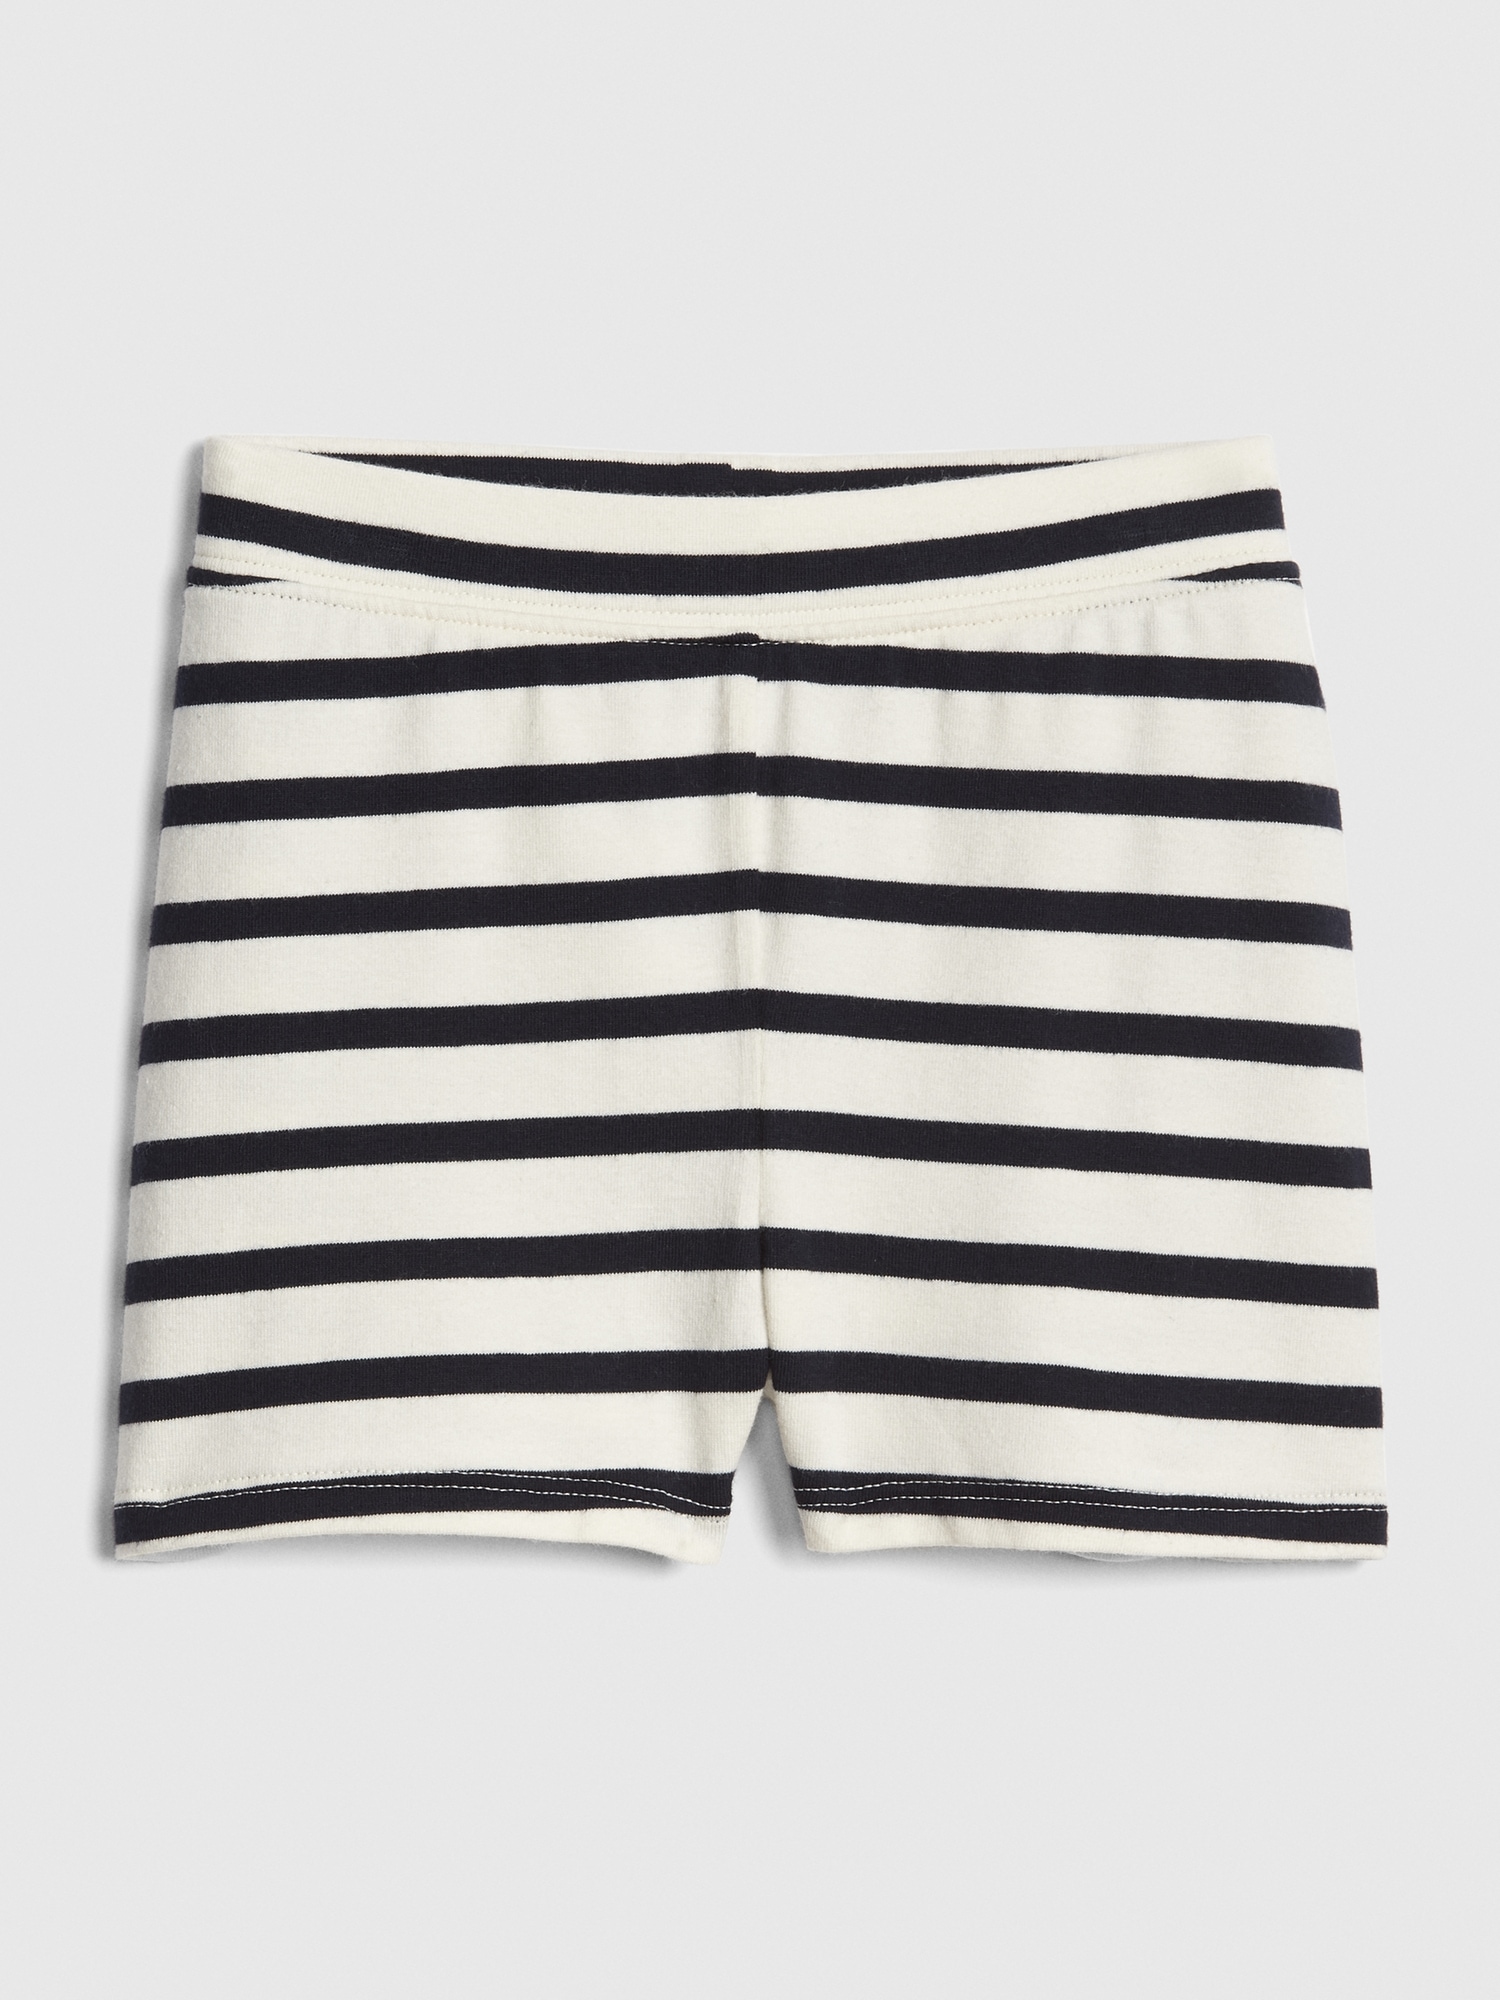 gap striped shorts